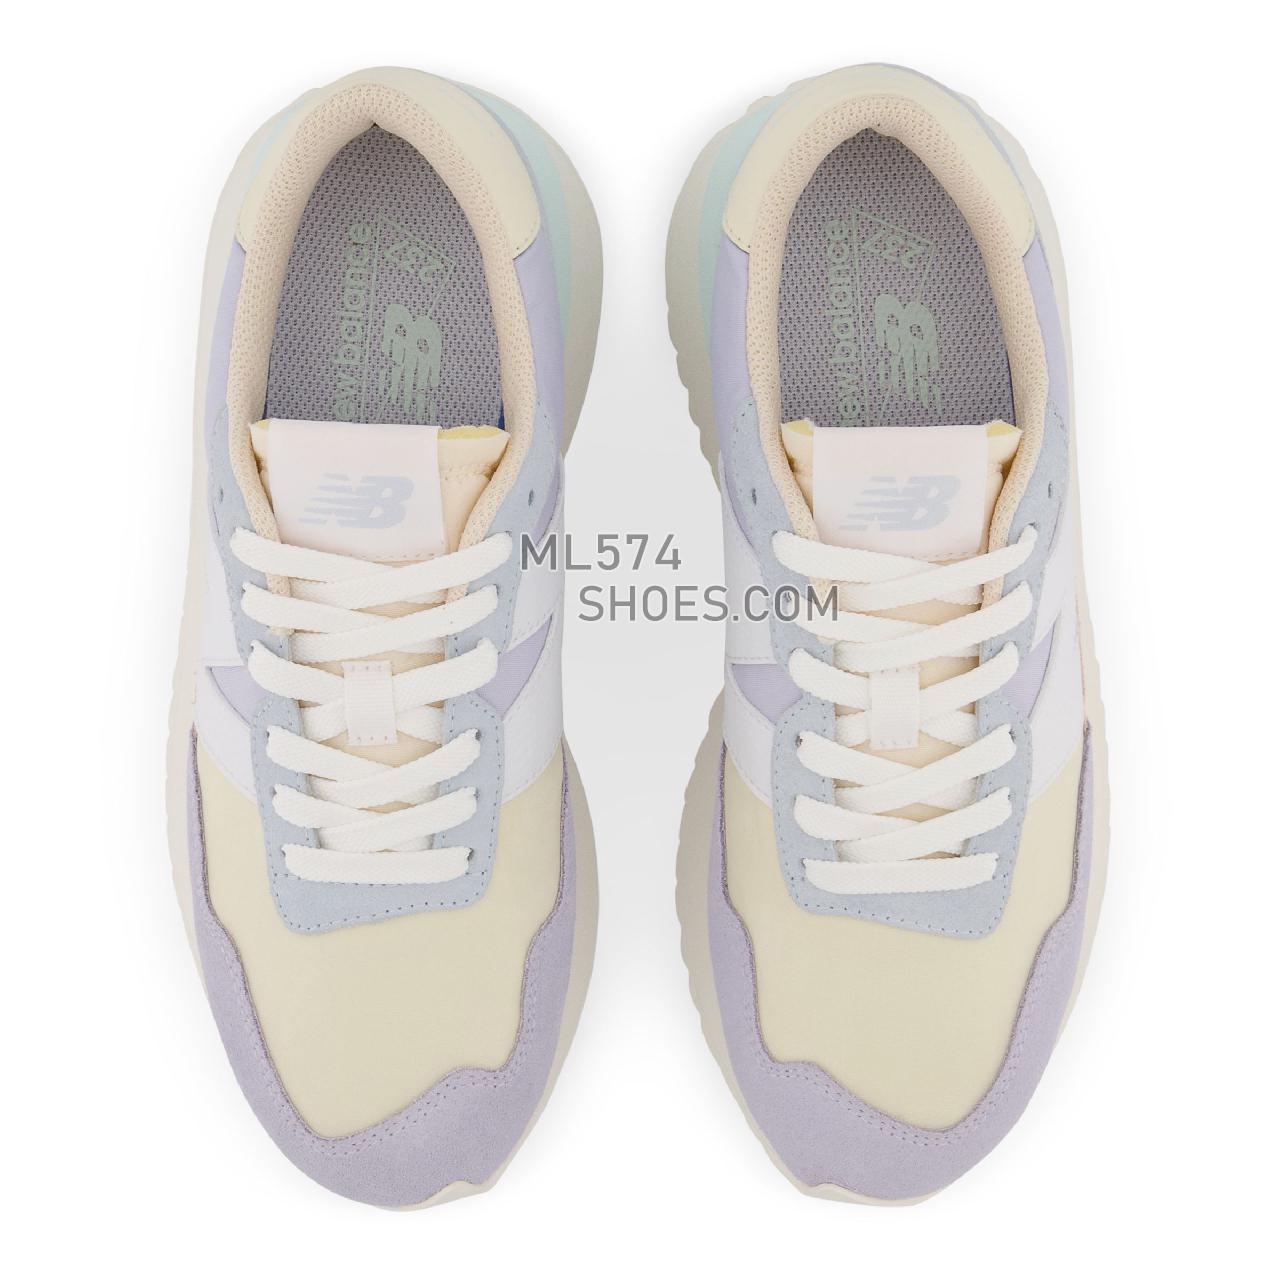 New Balance 237 - Women's Sport Style Sneakers - Violet Haze with Macadamia Nut - WS237PC